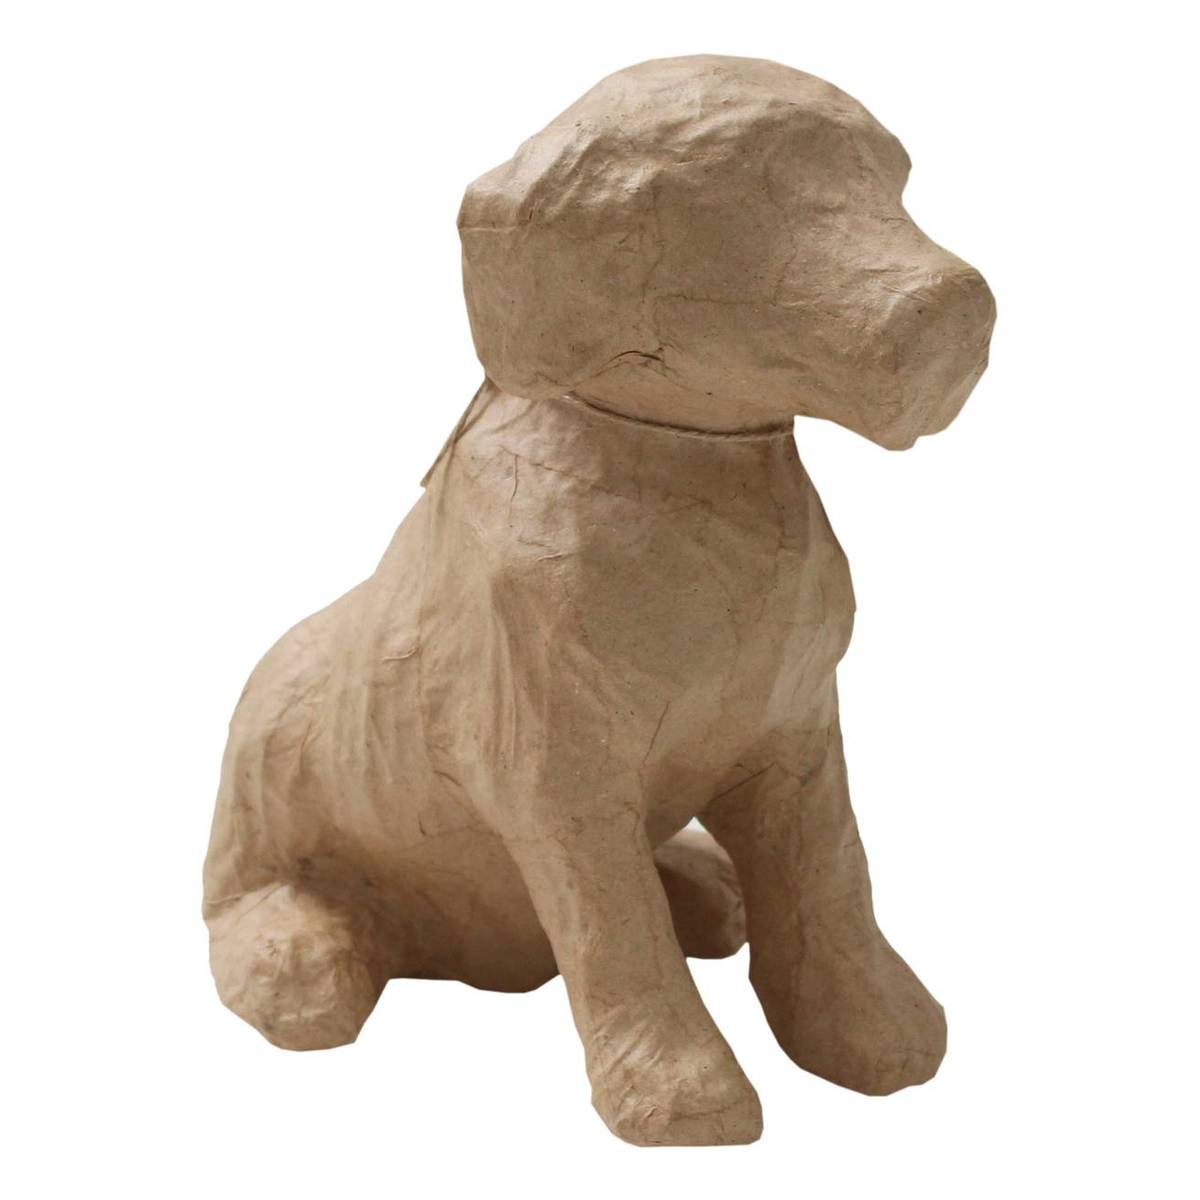 Decopatch Medium Paper Mache Animal - Dog 